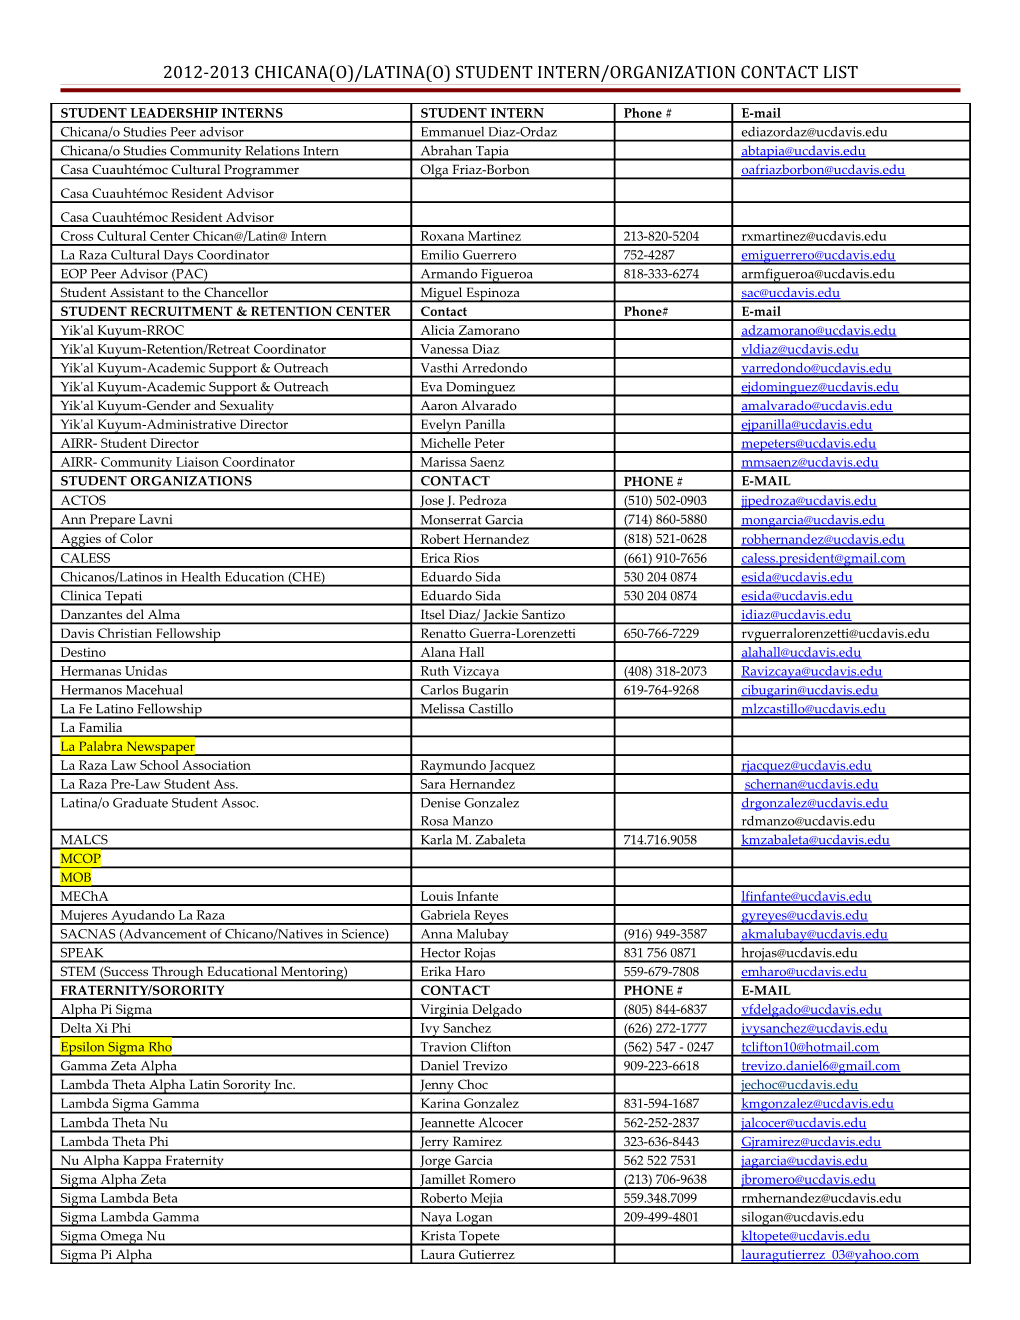 2009-2010 Chicana(O)/Latina(O) Student Organization Contact List